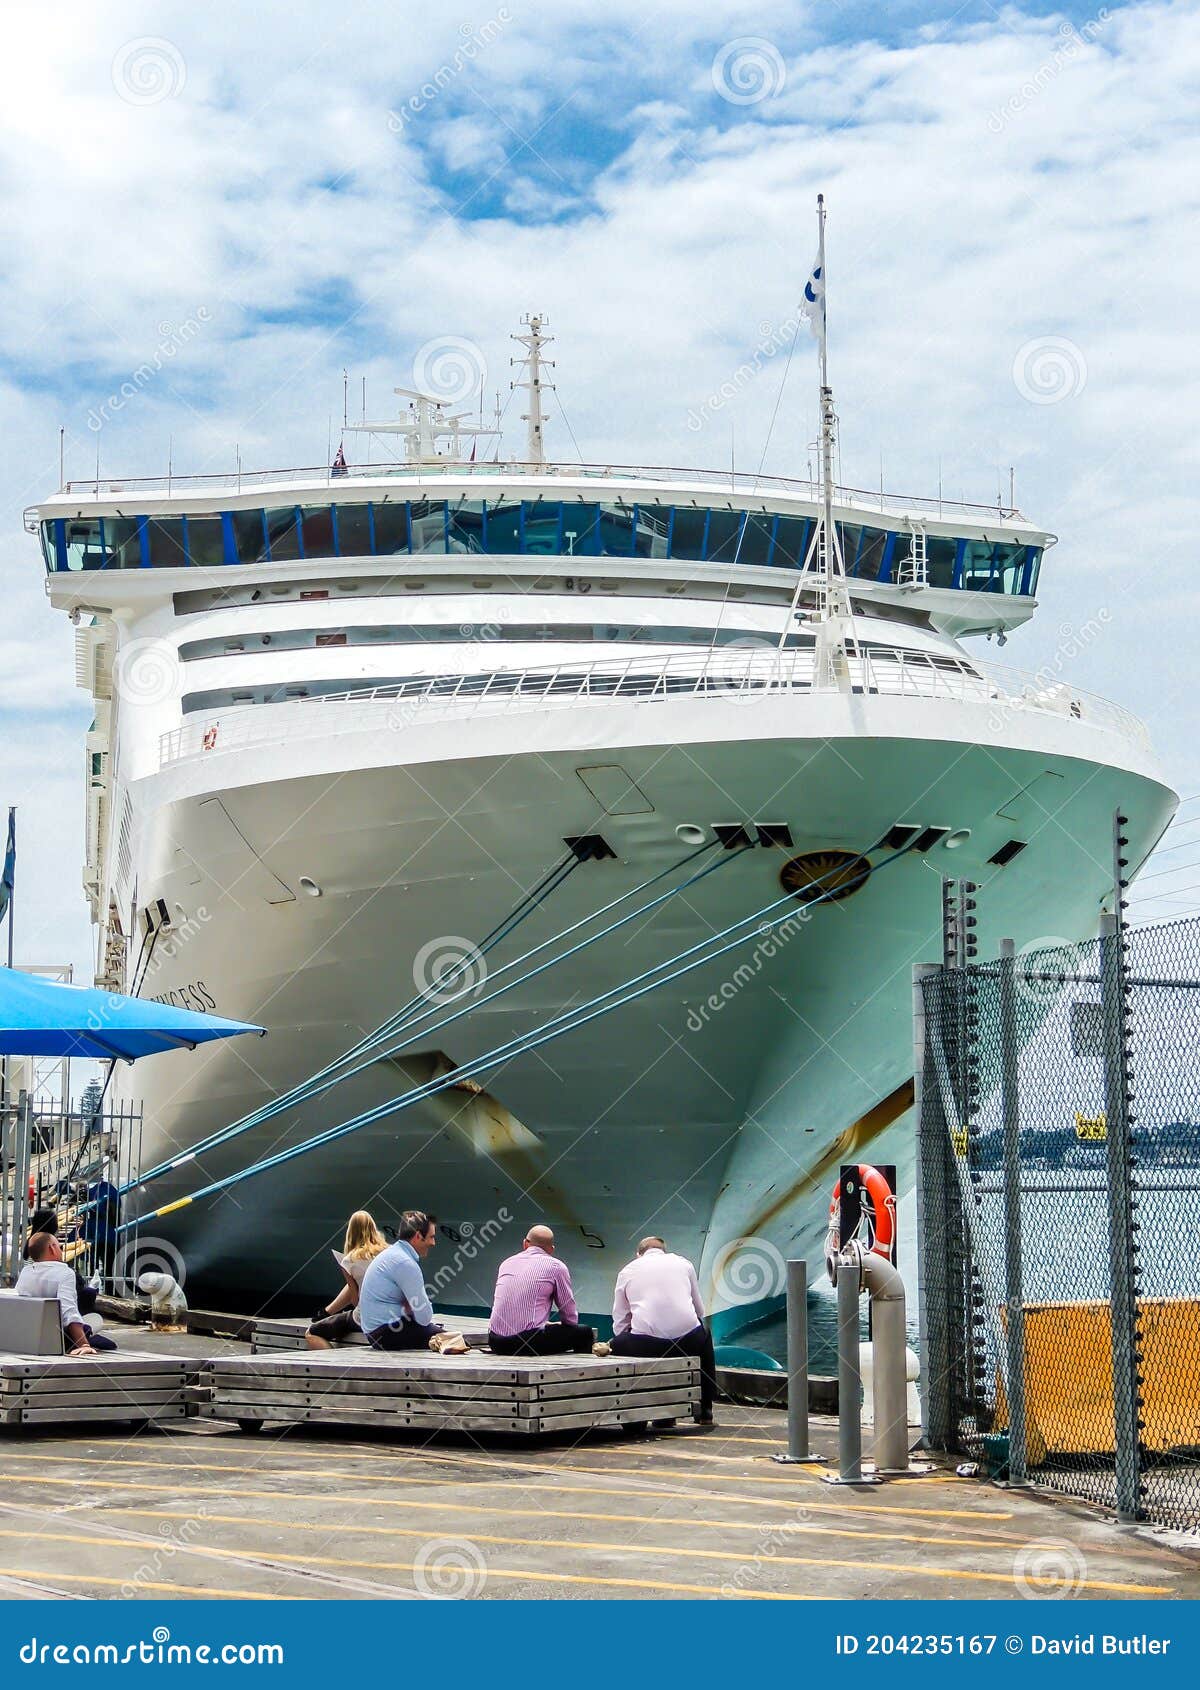 cruise ship auckland arrival